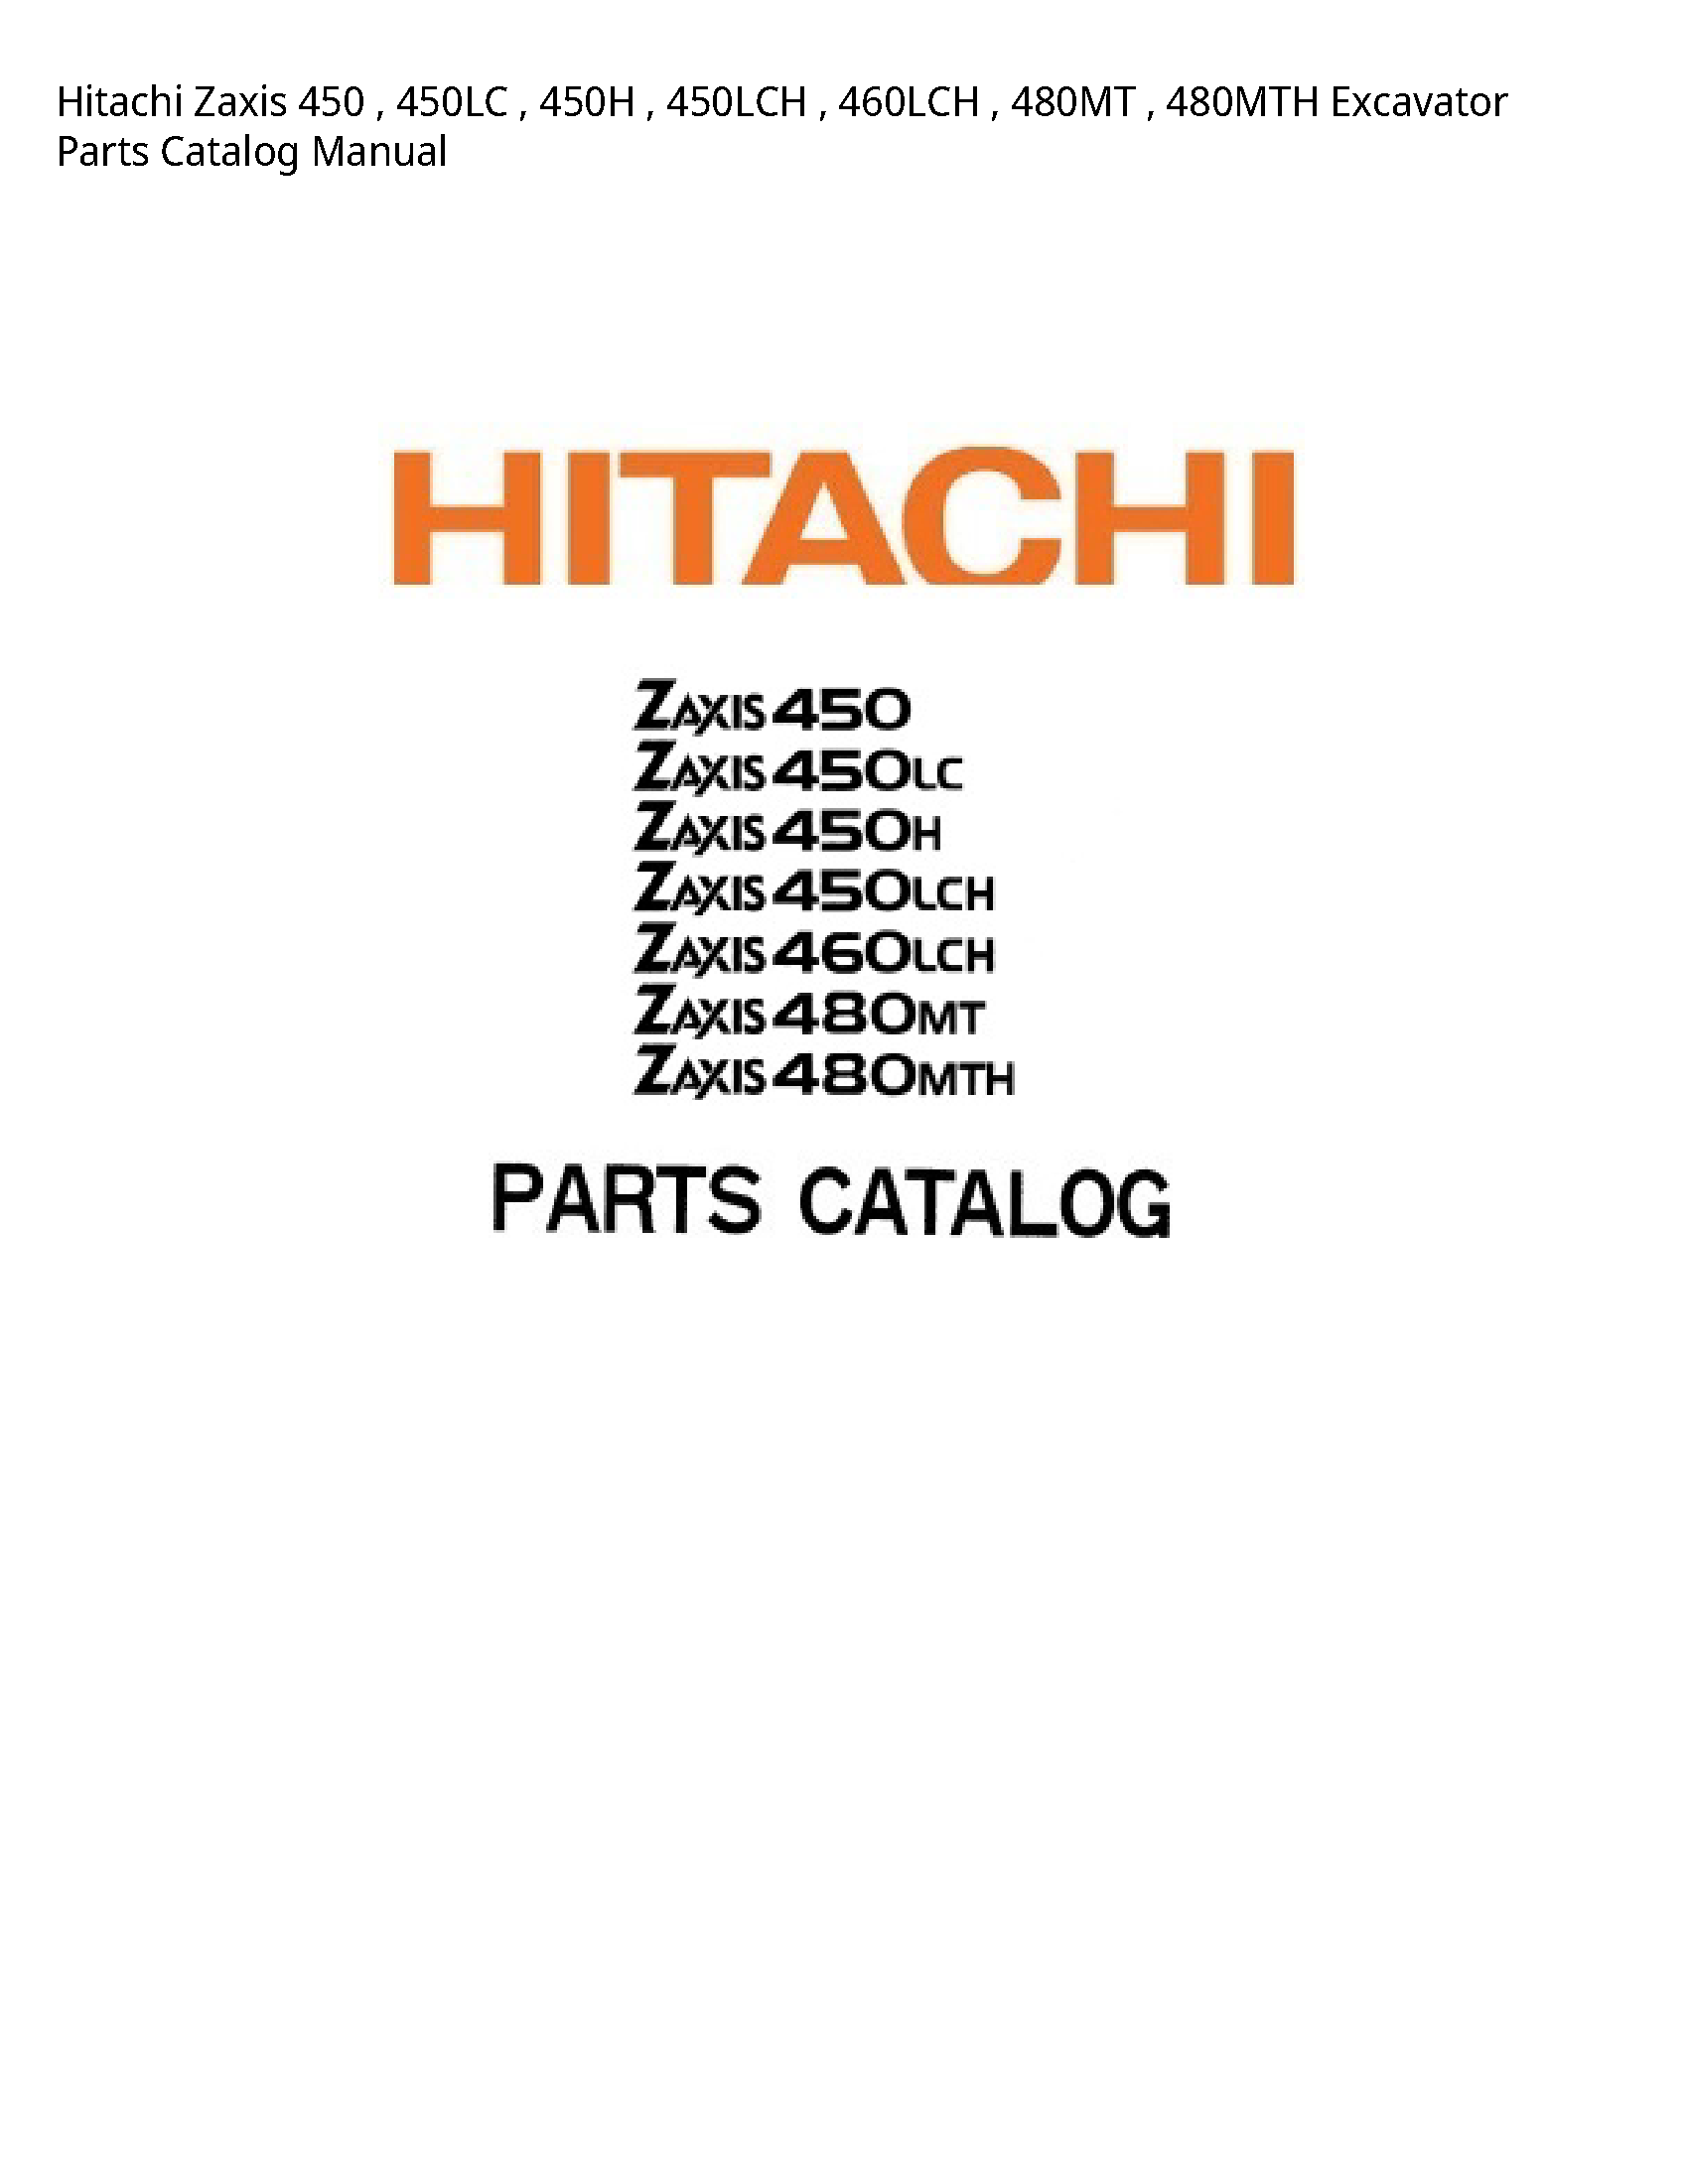 Hitachi 450 Zaxis Excavator Parts Catalog manual